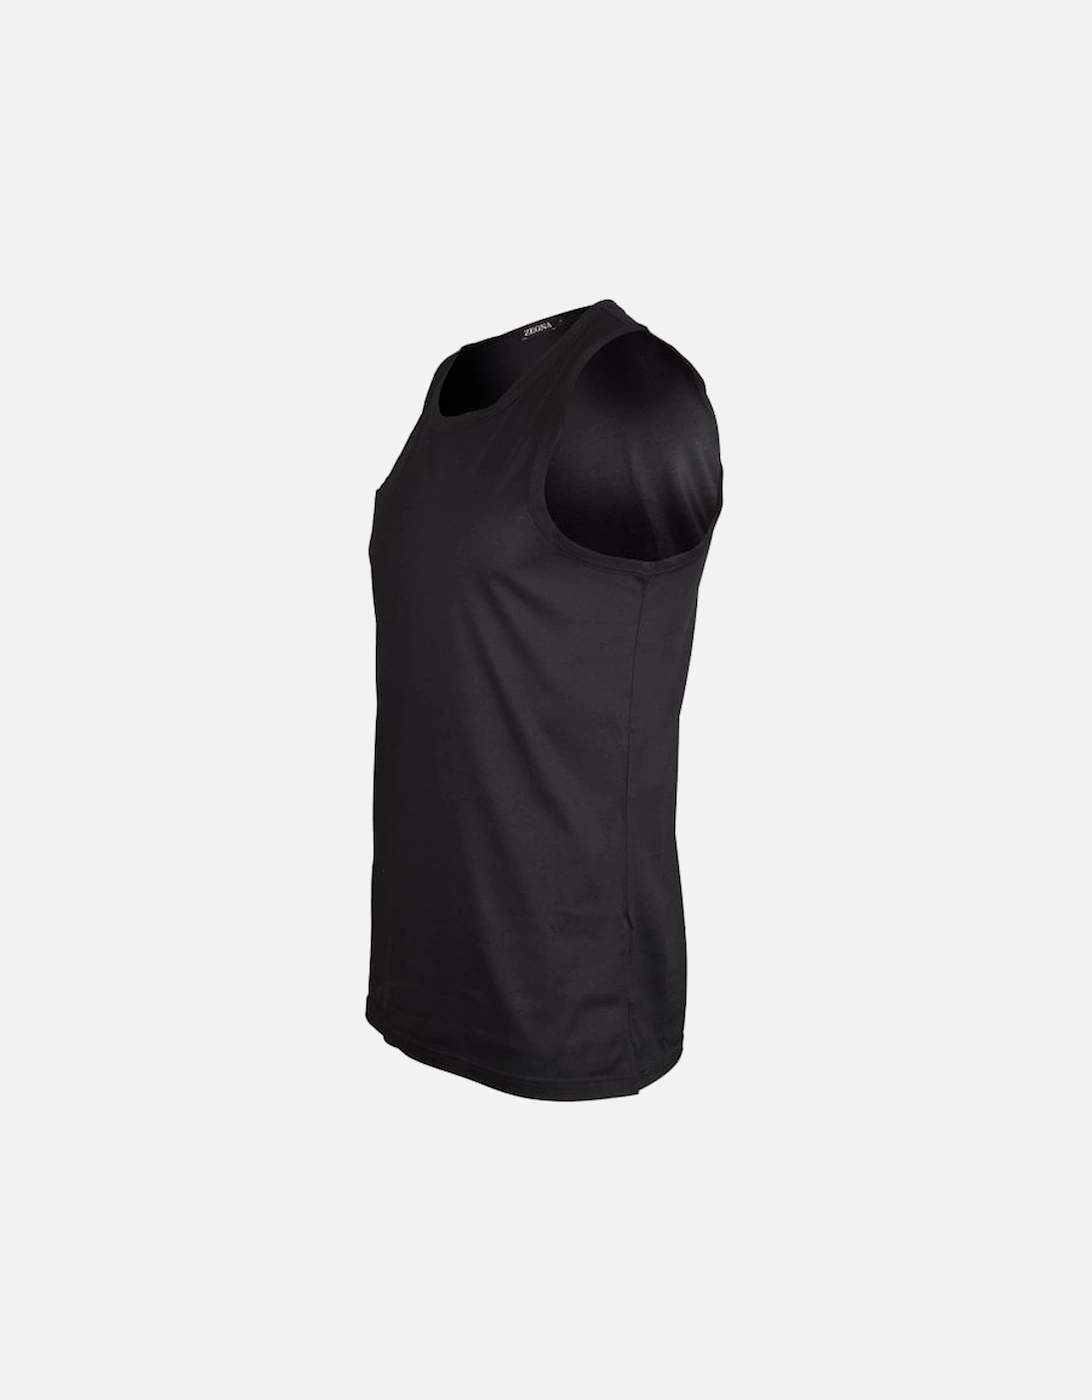 Filoscozia Cotton Tank Top Vest, Black